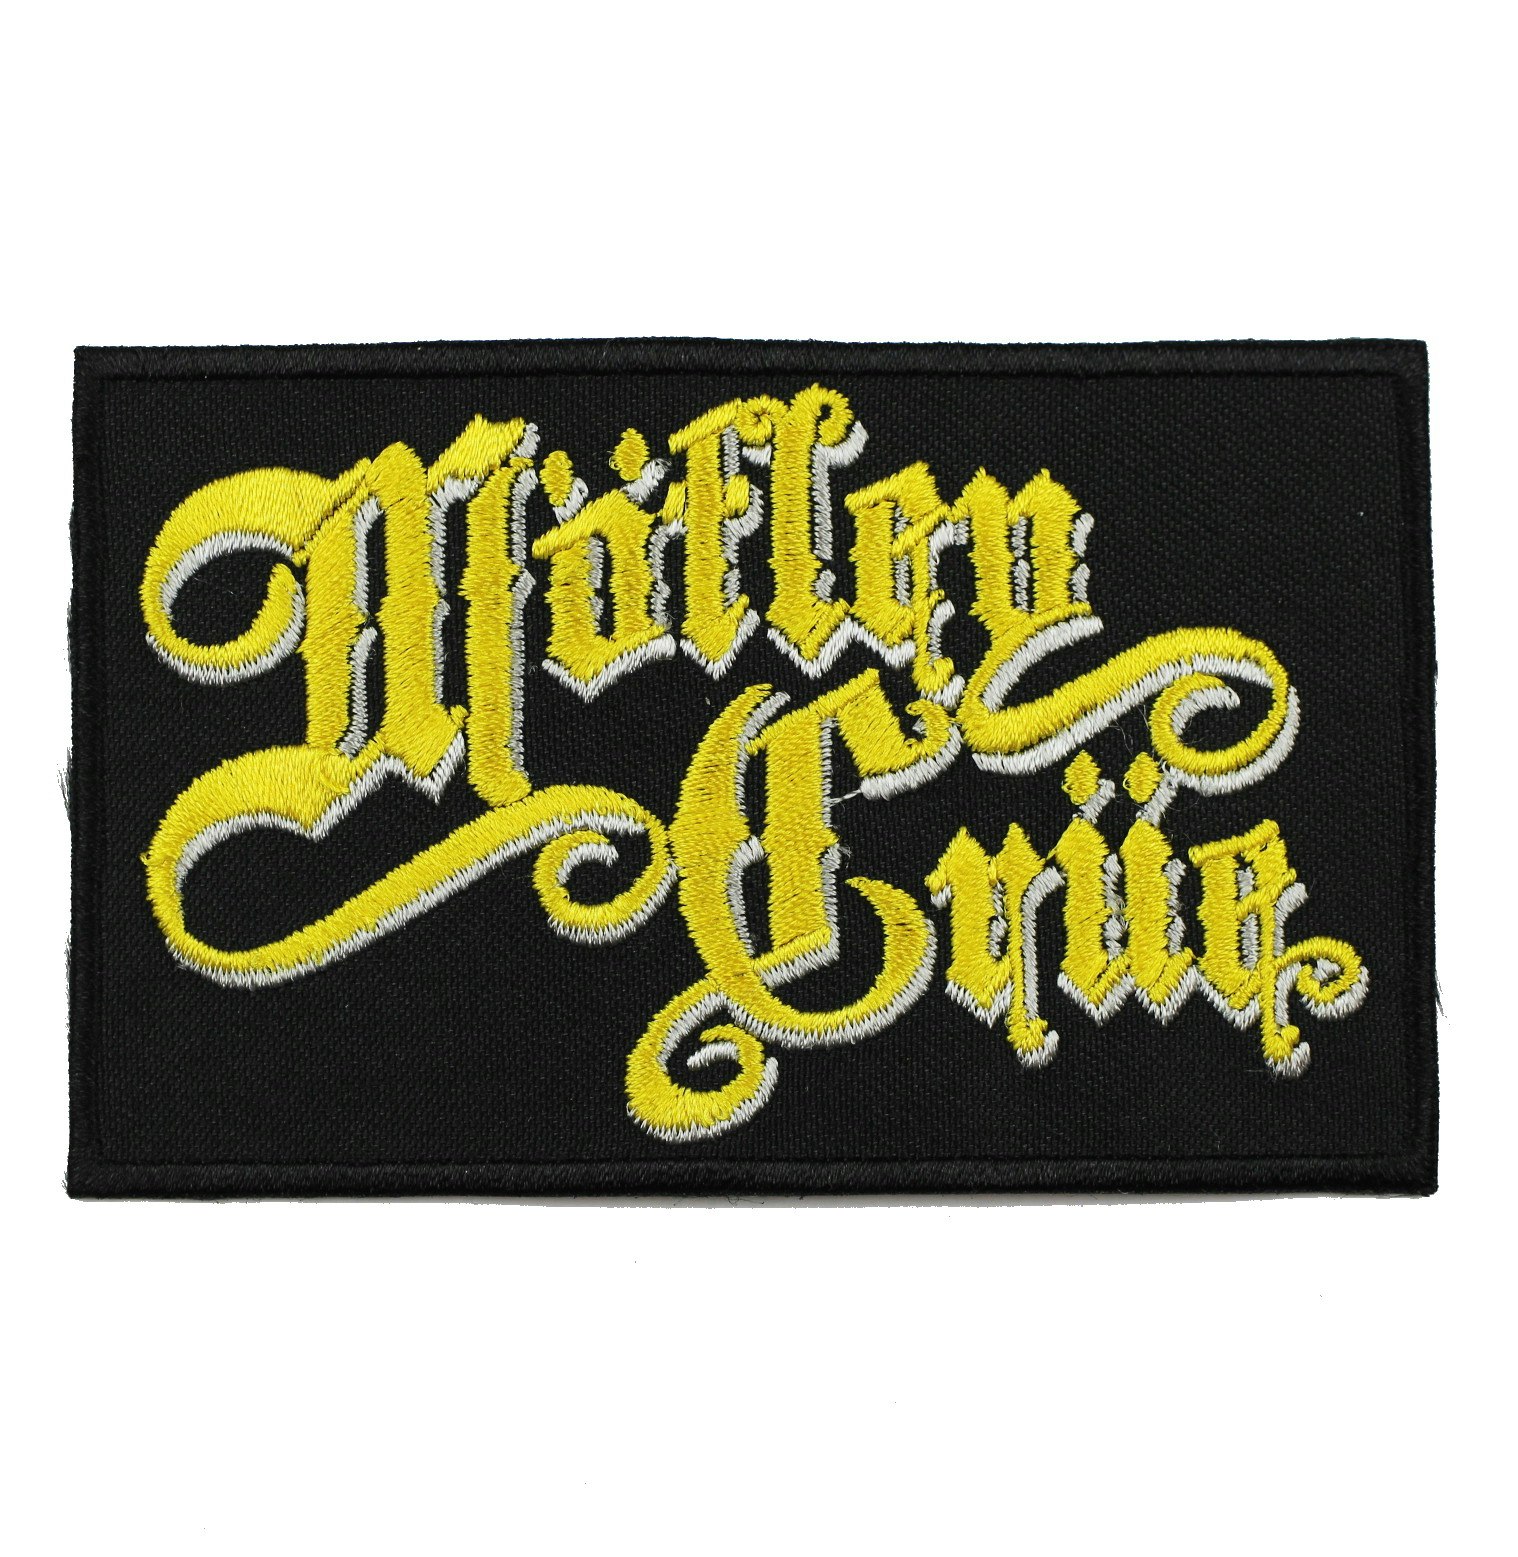 Mötley crue logo patch